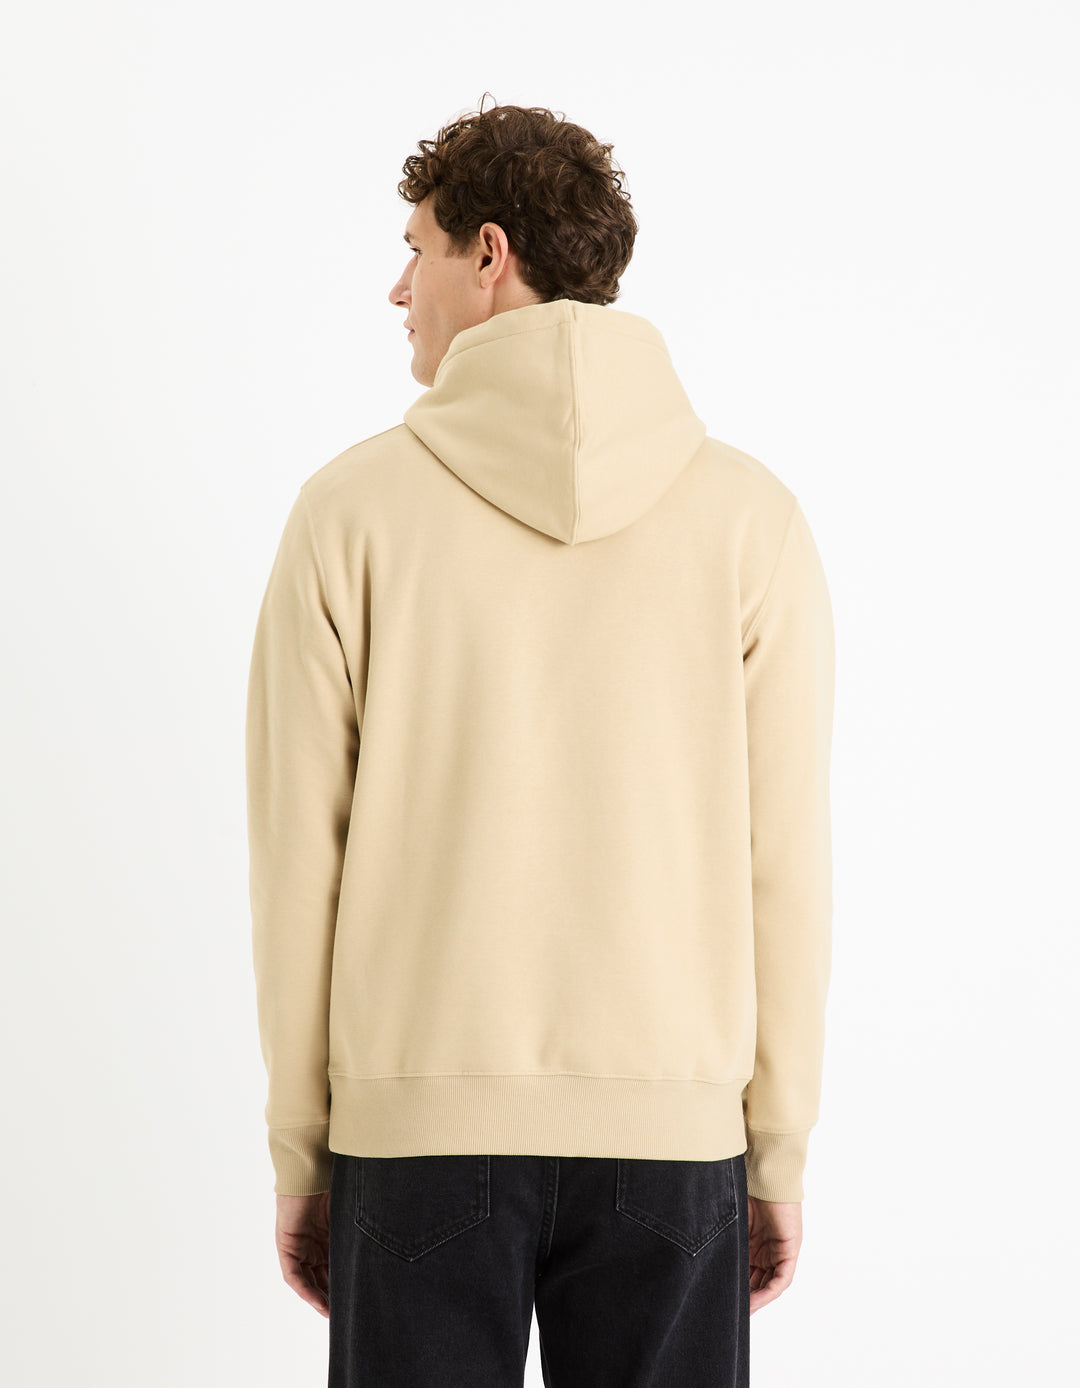 Unisex - Knitted - Sweatshirt - Long sleeves